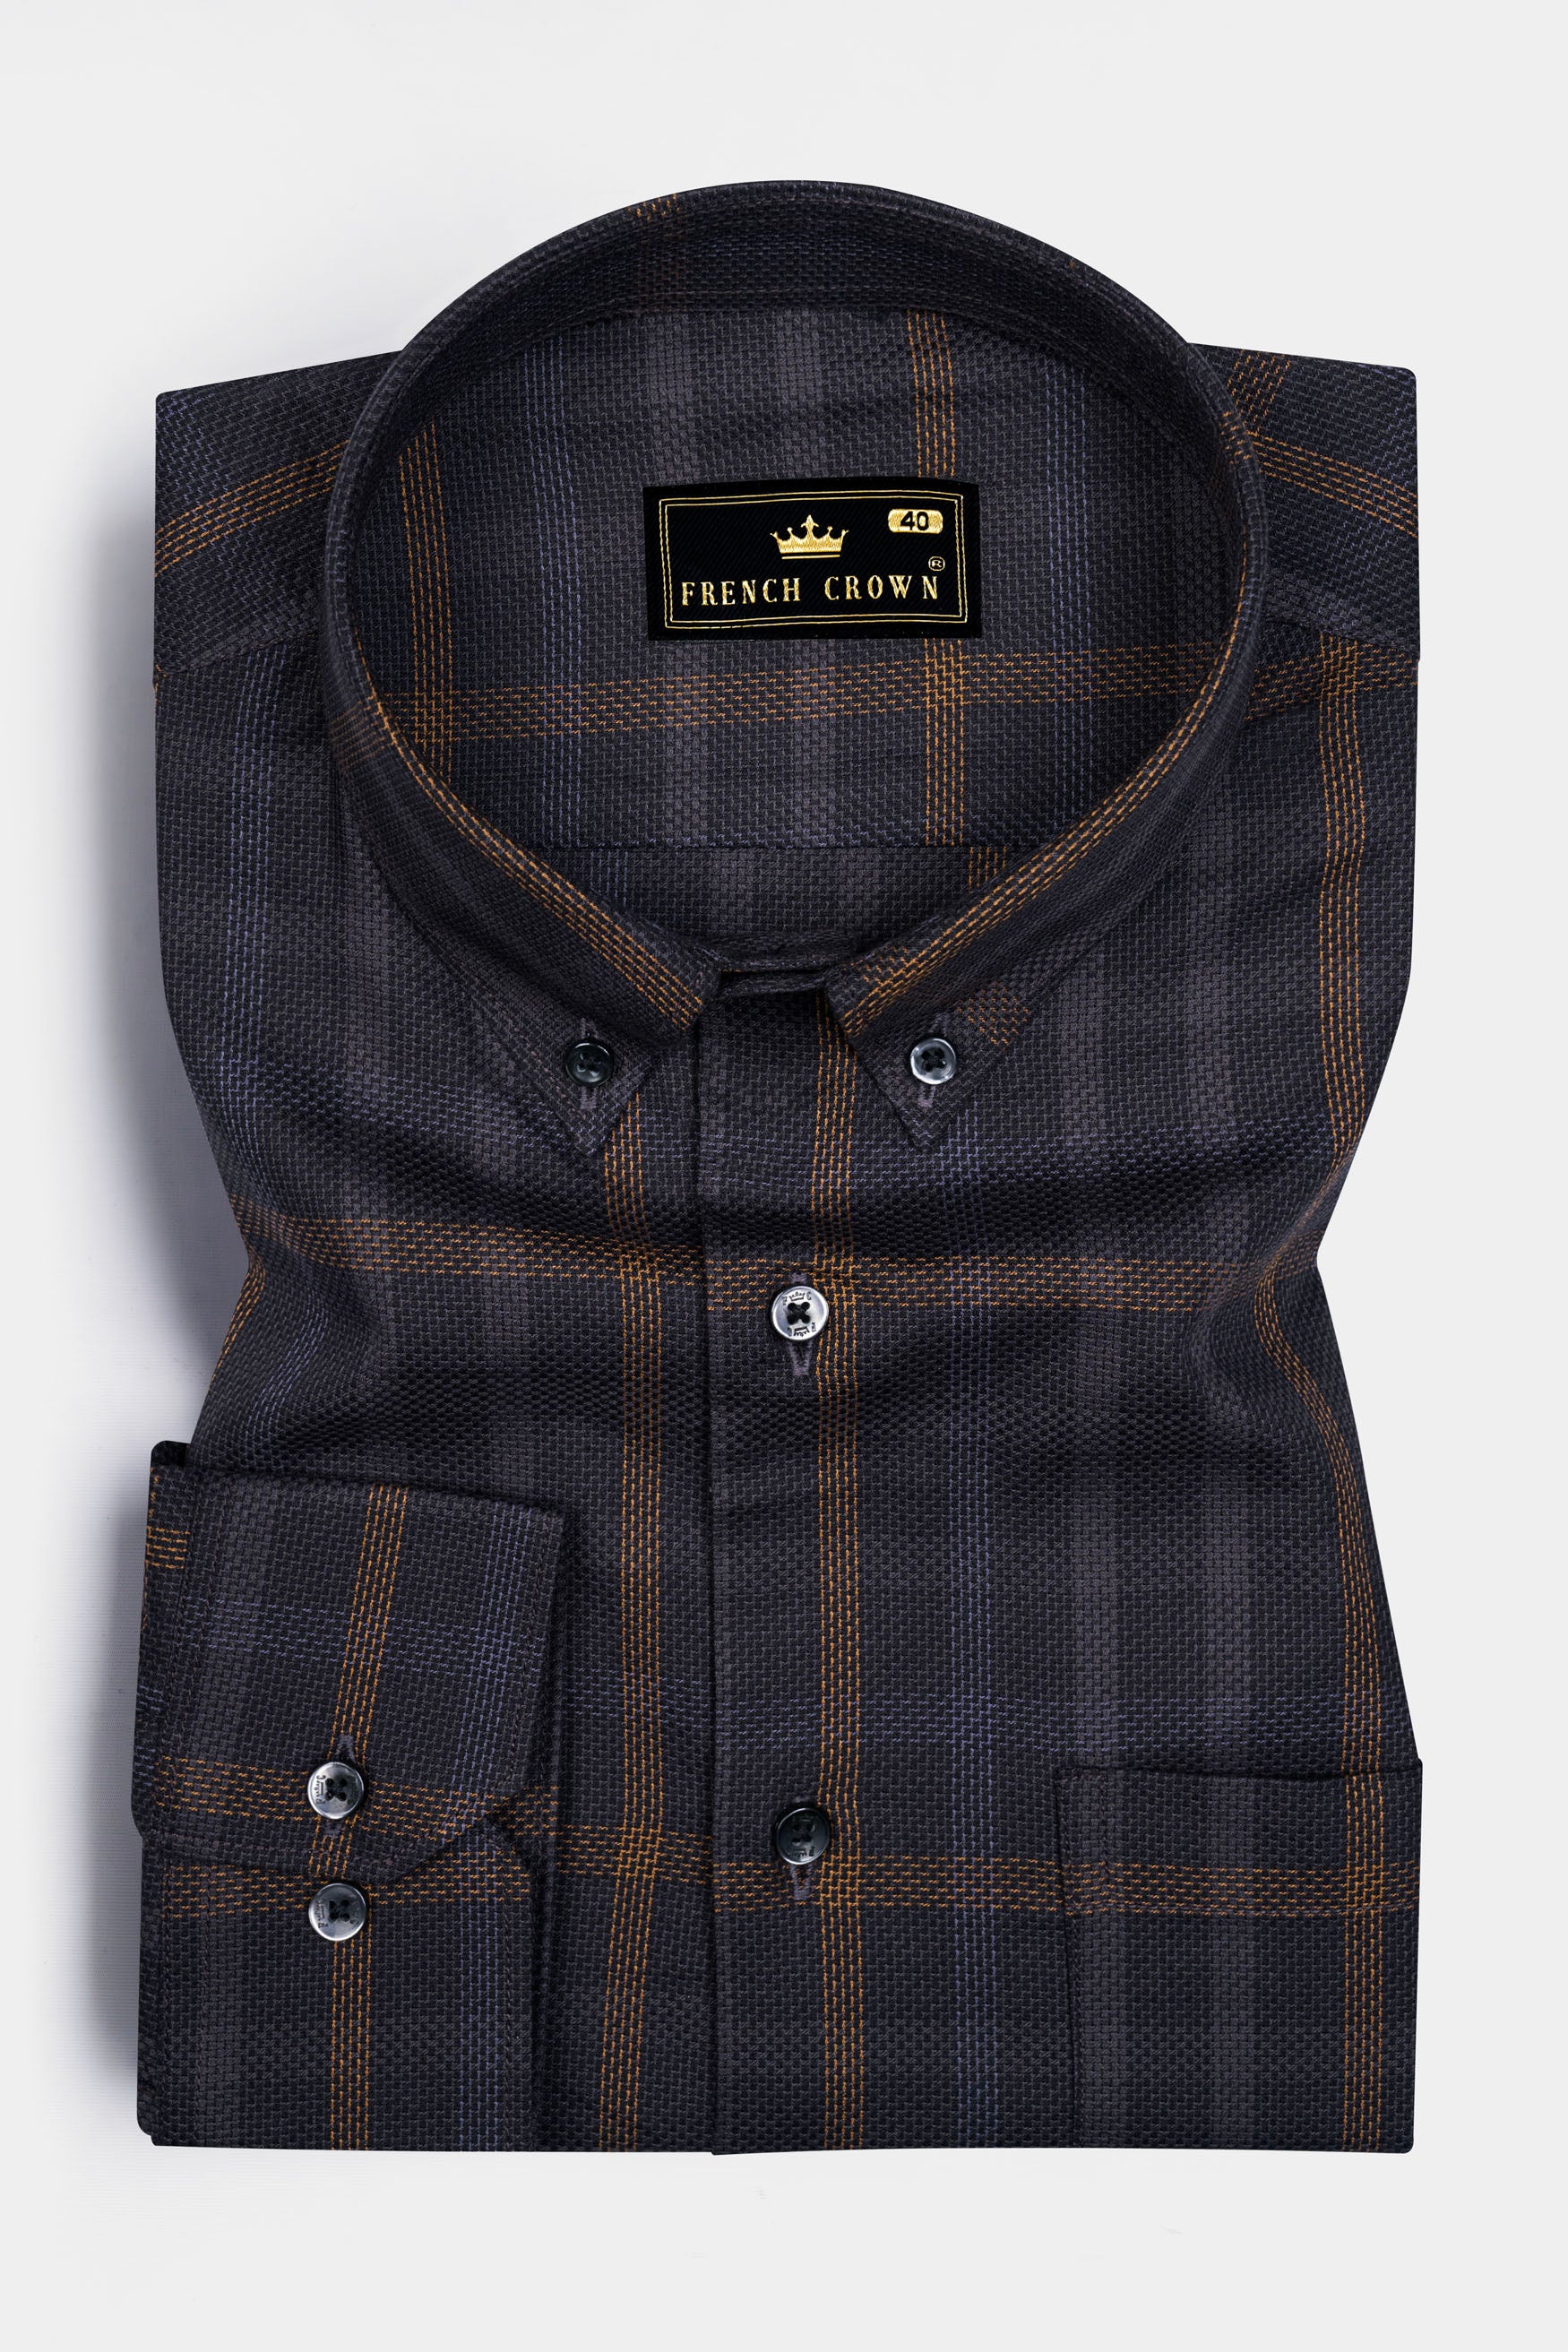 Gondola Black and Mist Gray Checkered Dobby Textured Premium Giza Cotton Shirt